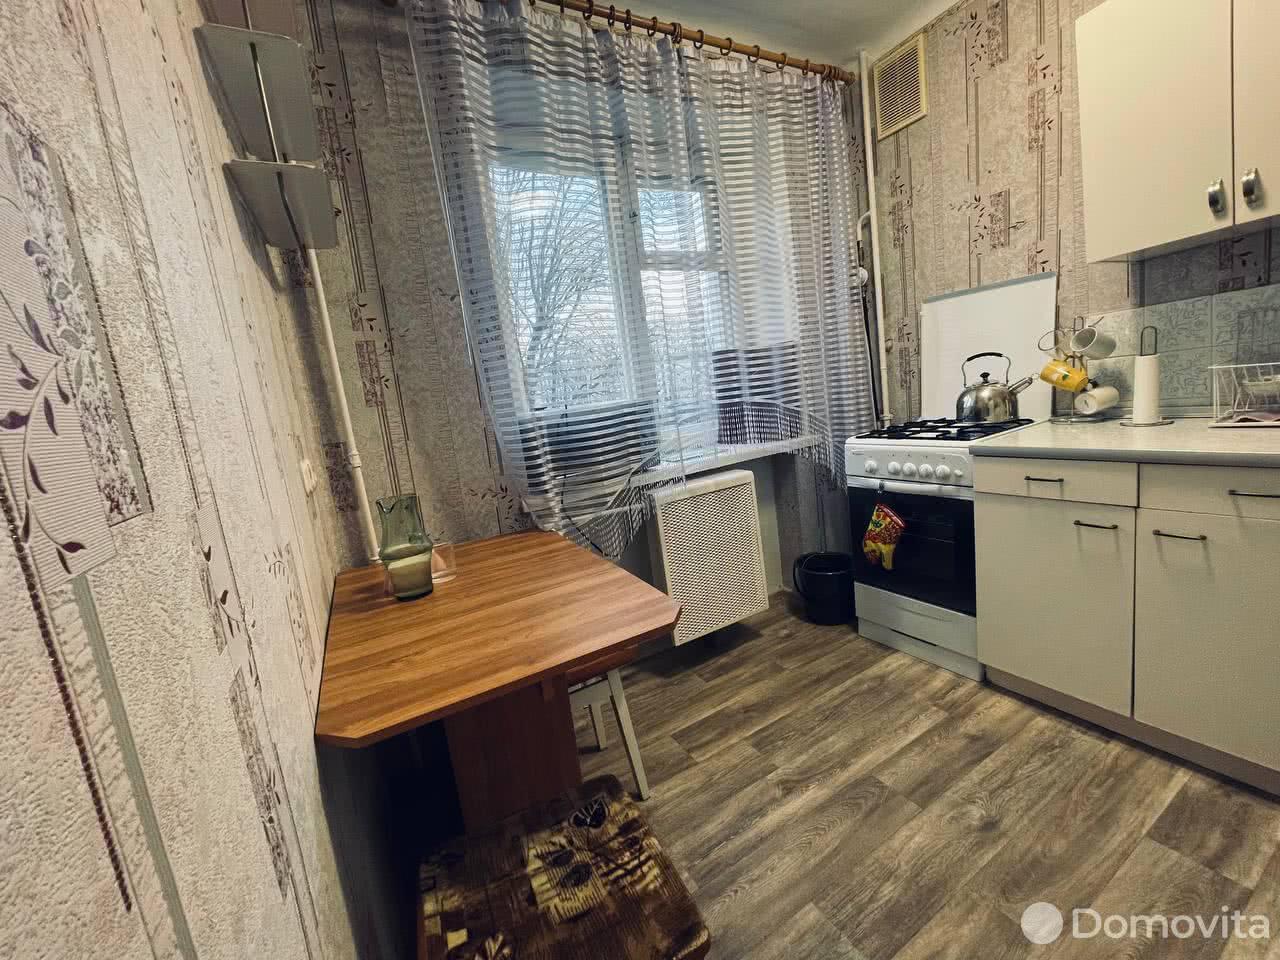 квартира, Минск, ул. Жилуновича, д. 41, стоимость аренды 869 р./мес.